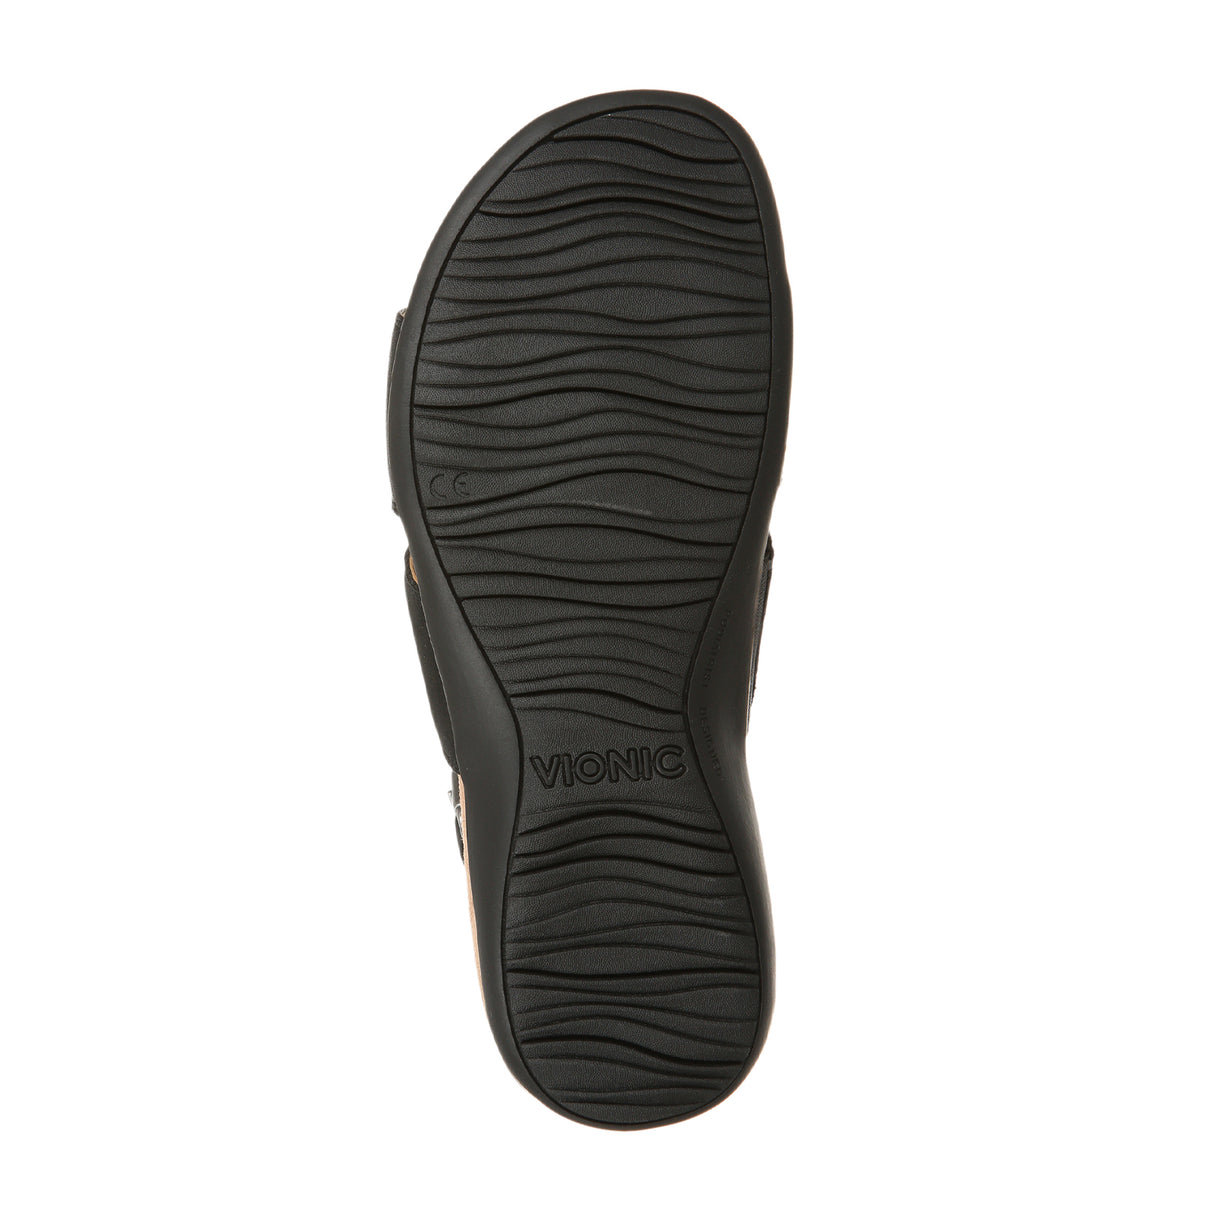 Vionic Morro (Women) - Black Leather Sandals - Backstrap - The Heel Shoe Fitters